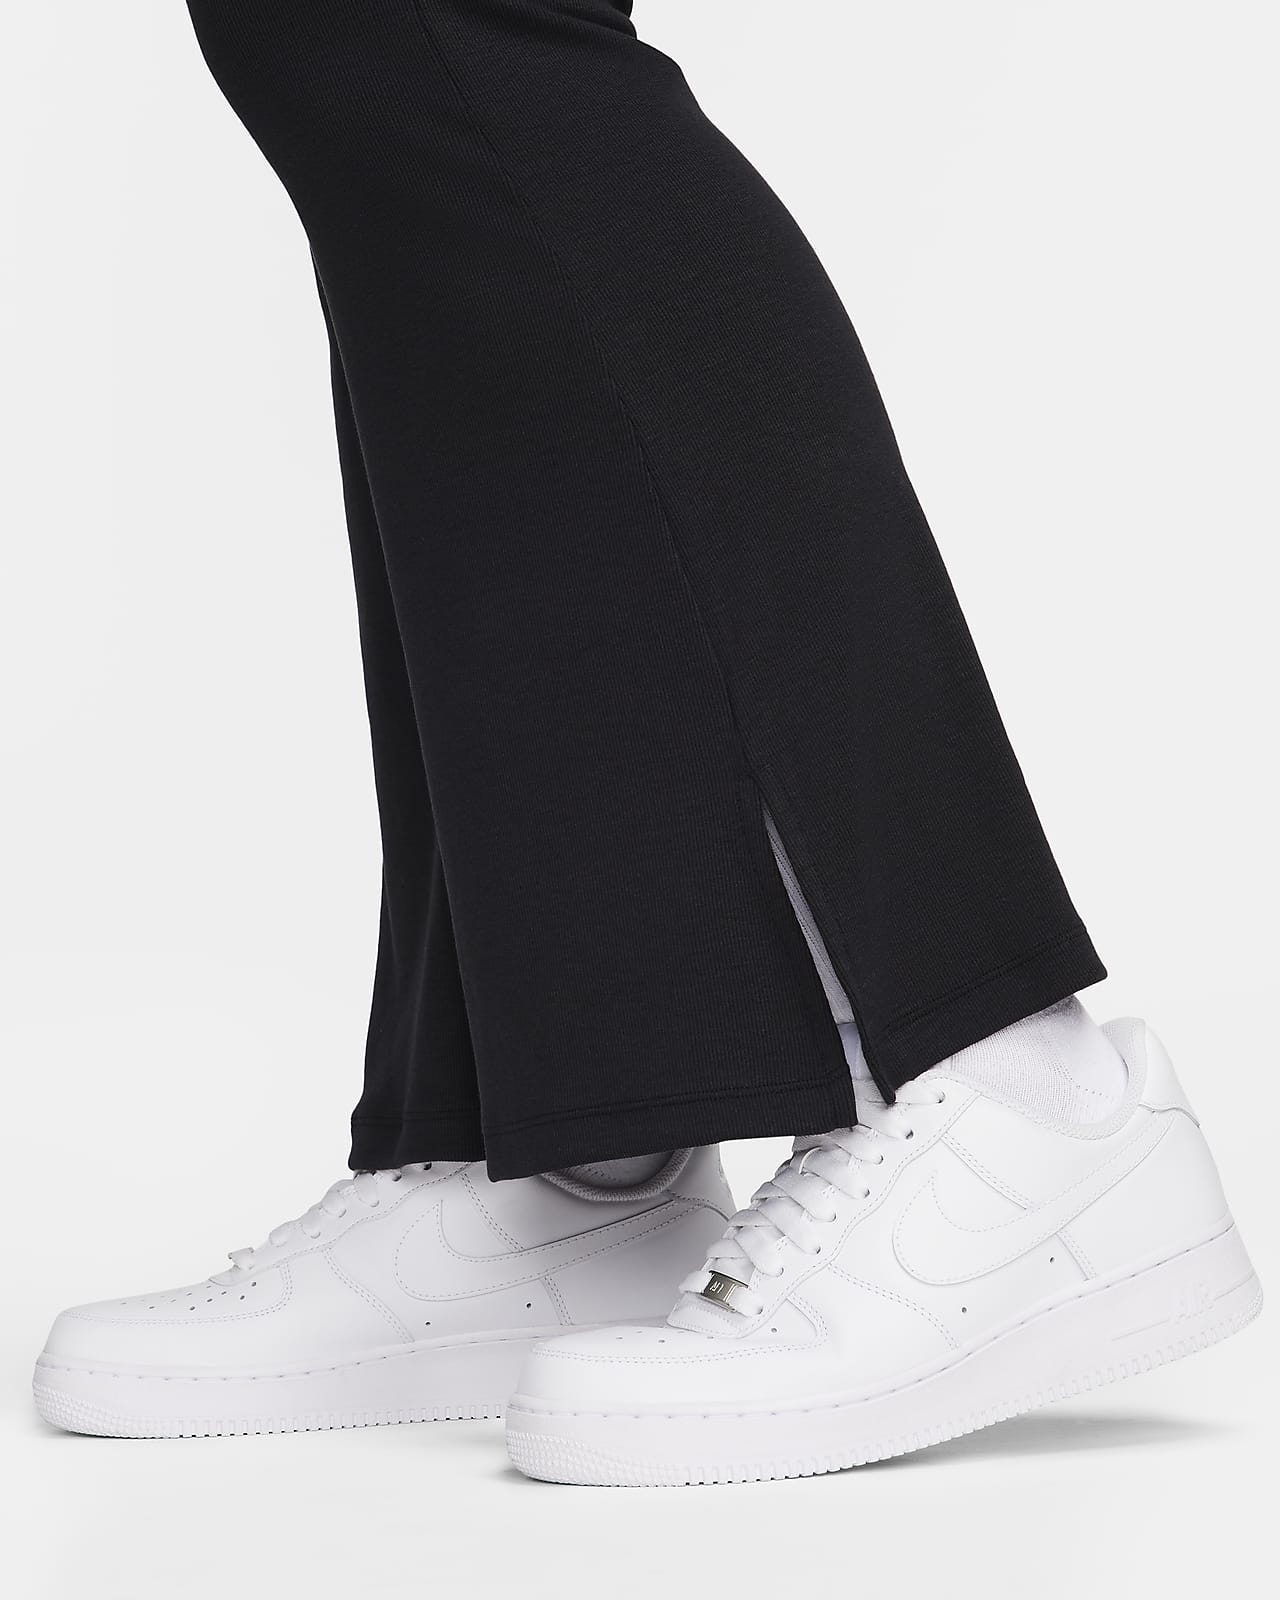 Nike Sportswear Chill Knit Women's Tight Mini-Rib Flared Leggings (Plus  Size).